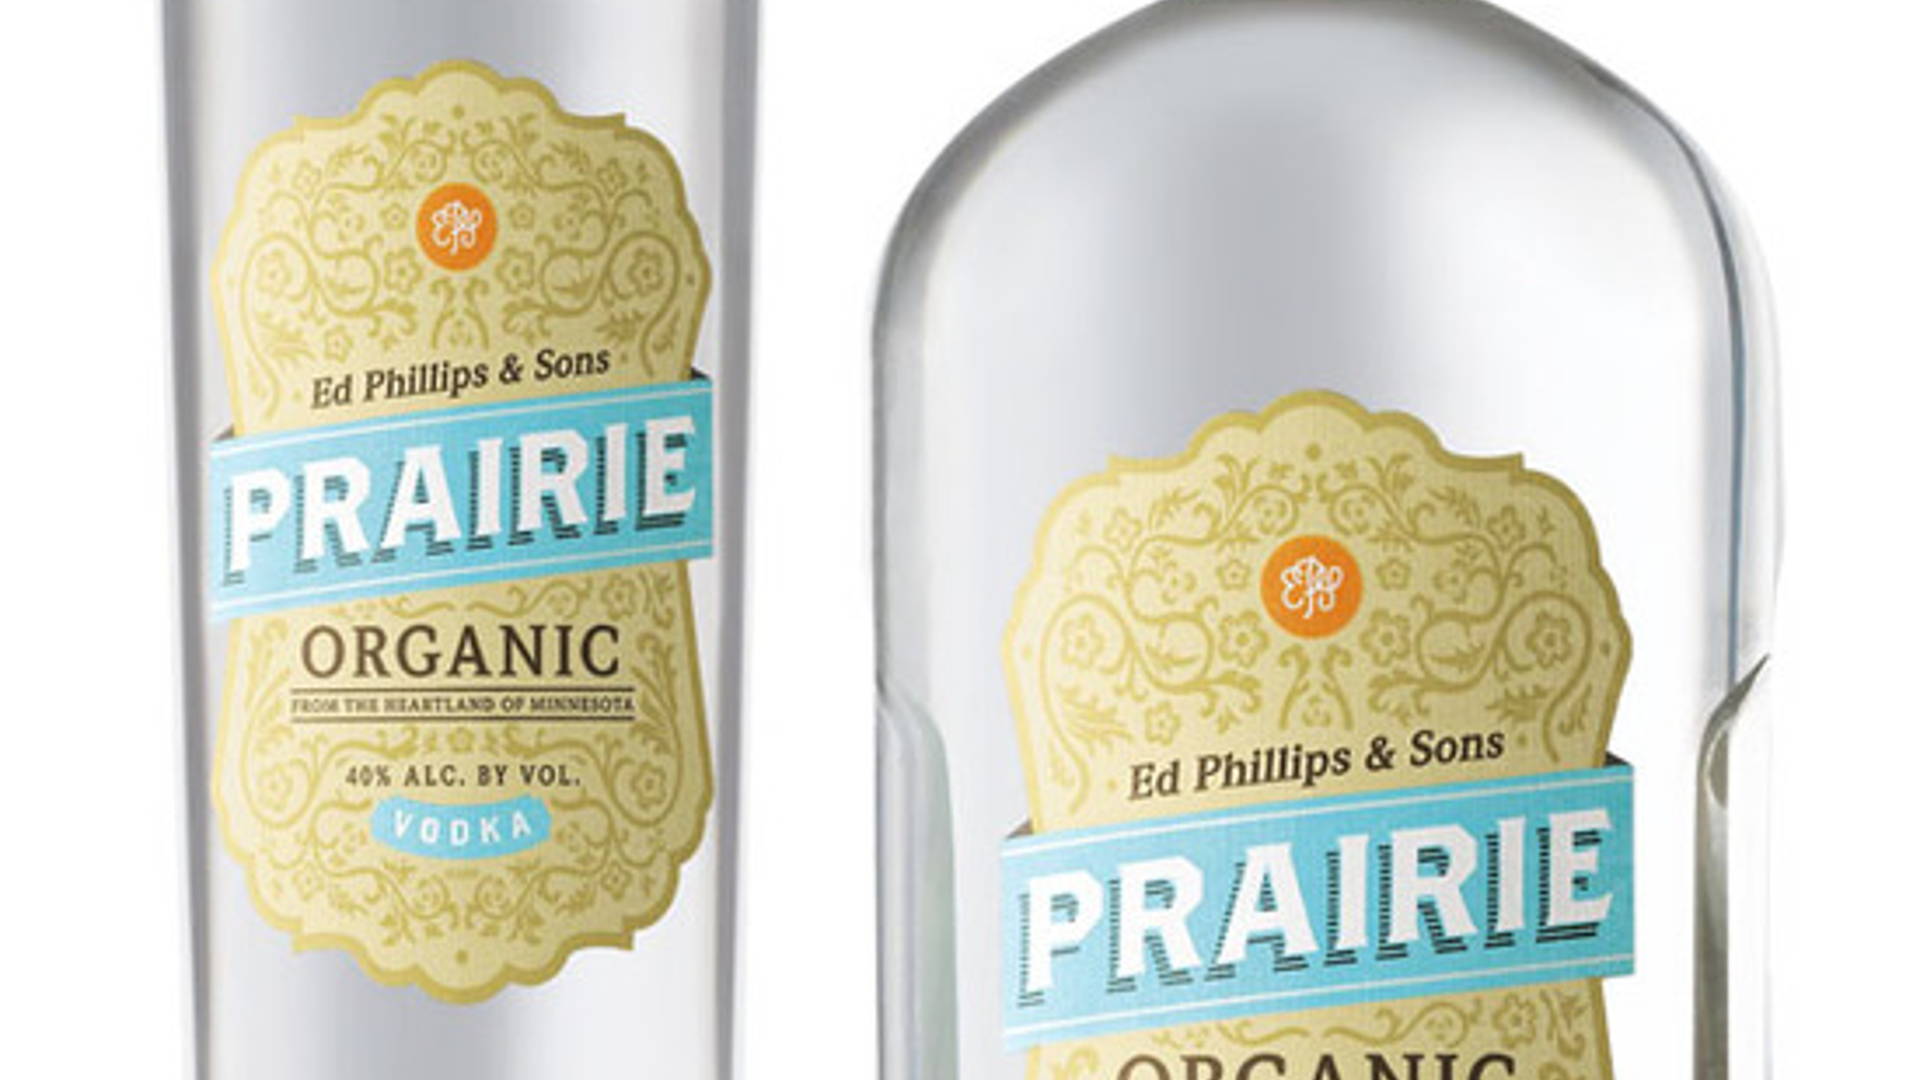 Featured image for Prairie Organic Vodka